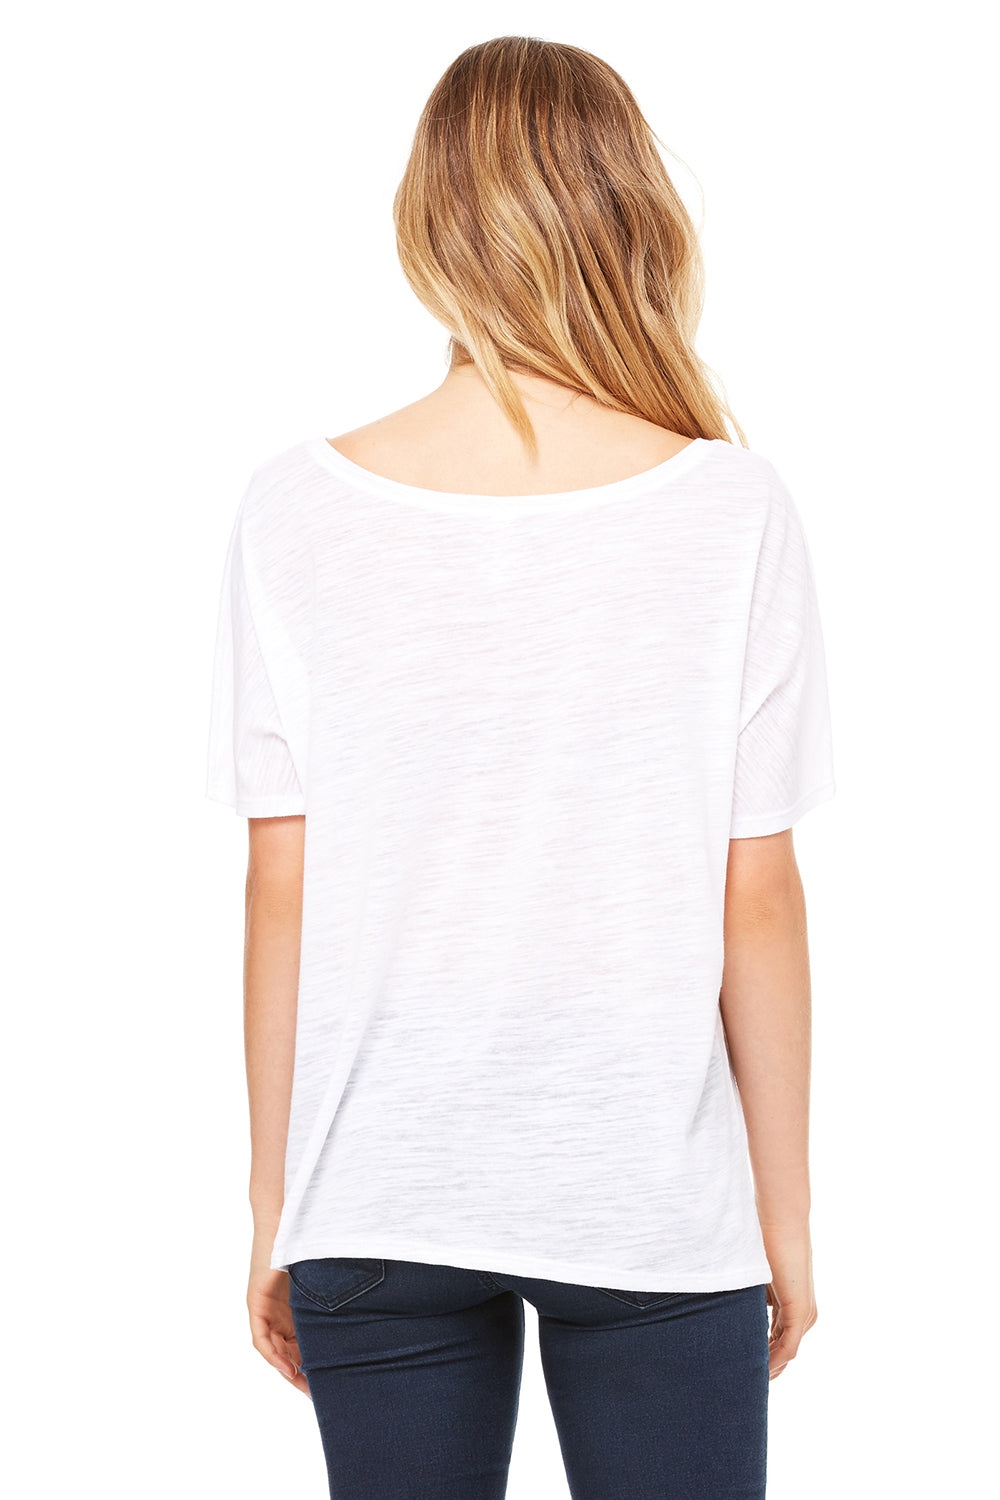 Bella + Canvas 8816 Womens Slouchy Short Sleeve Wide Neck T-Shirt White Slub Back